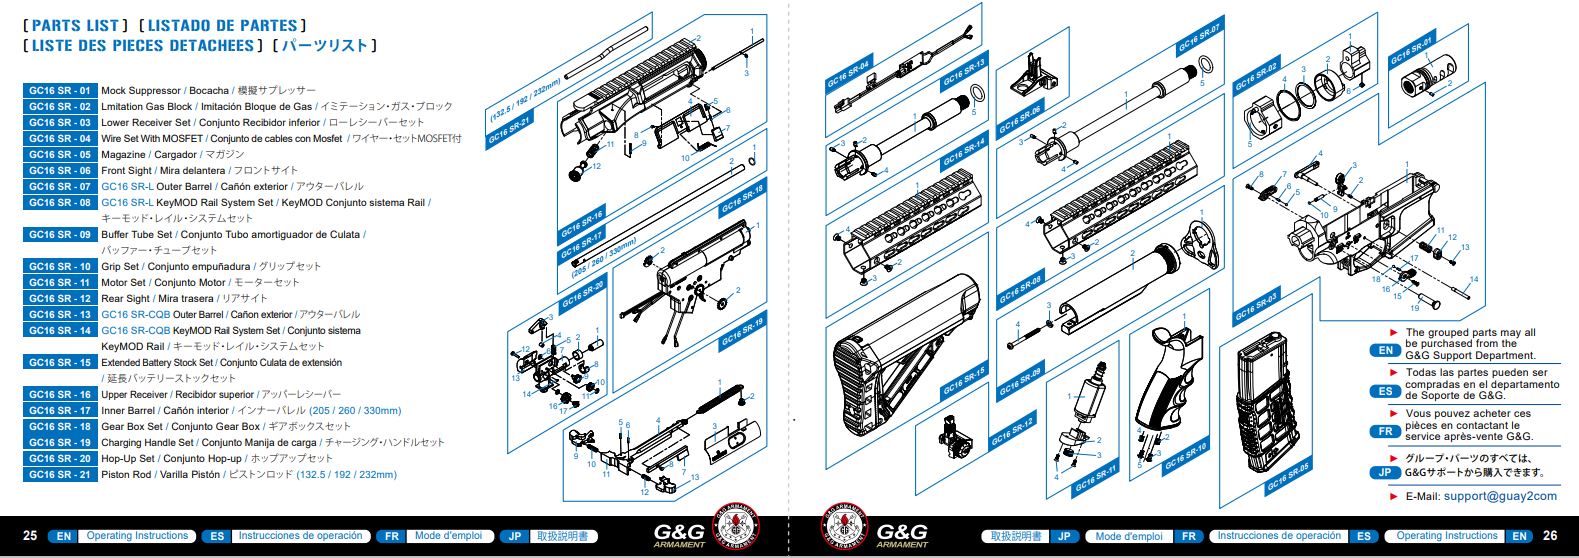 Spare Part GC16 SR-11 #4 (#4 2pcs.) - Motor Plate screws for GC16 SR Series - G&G